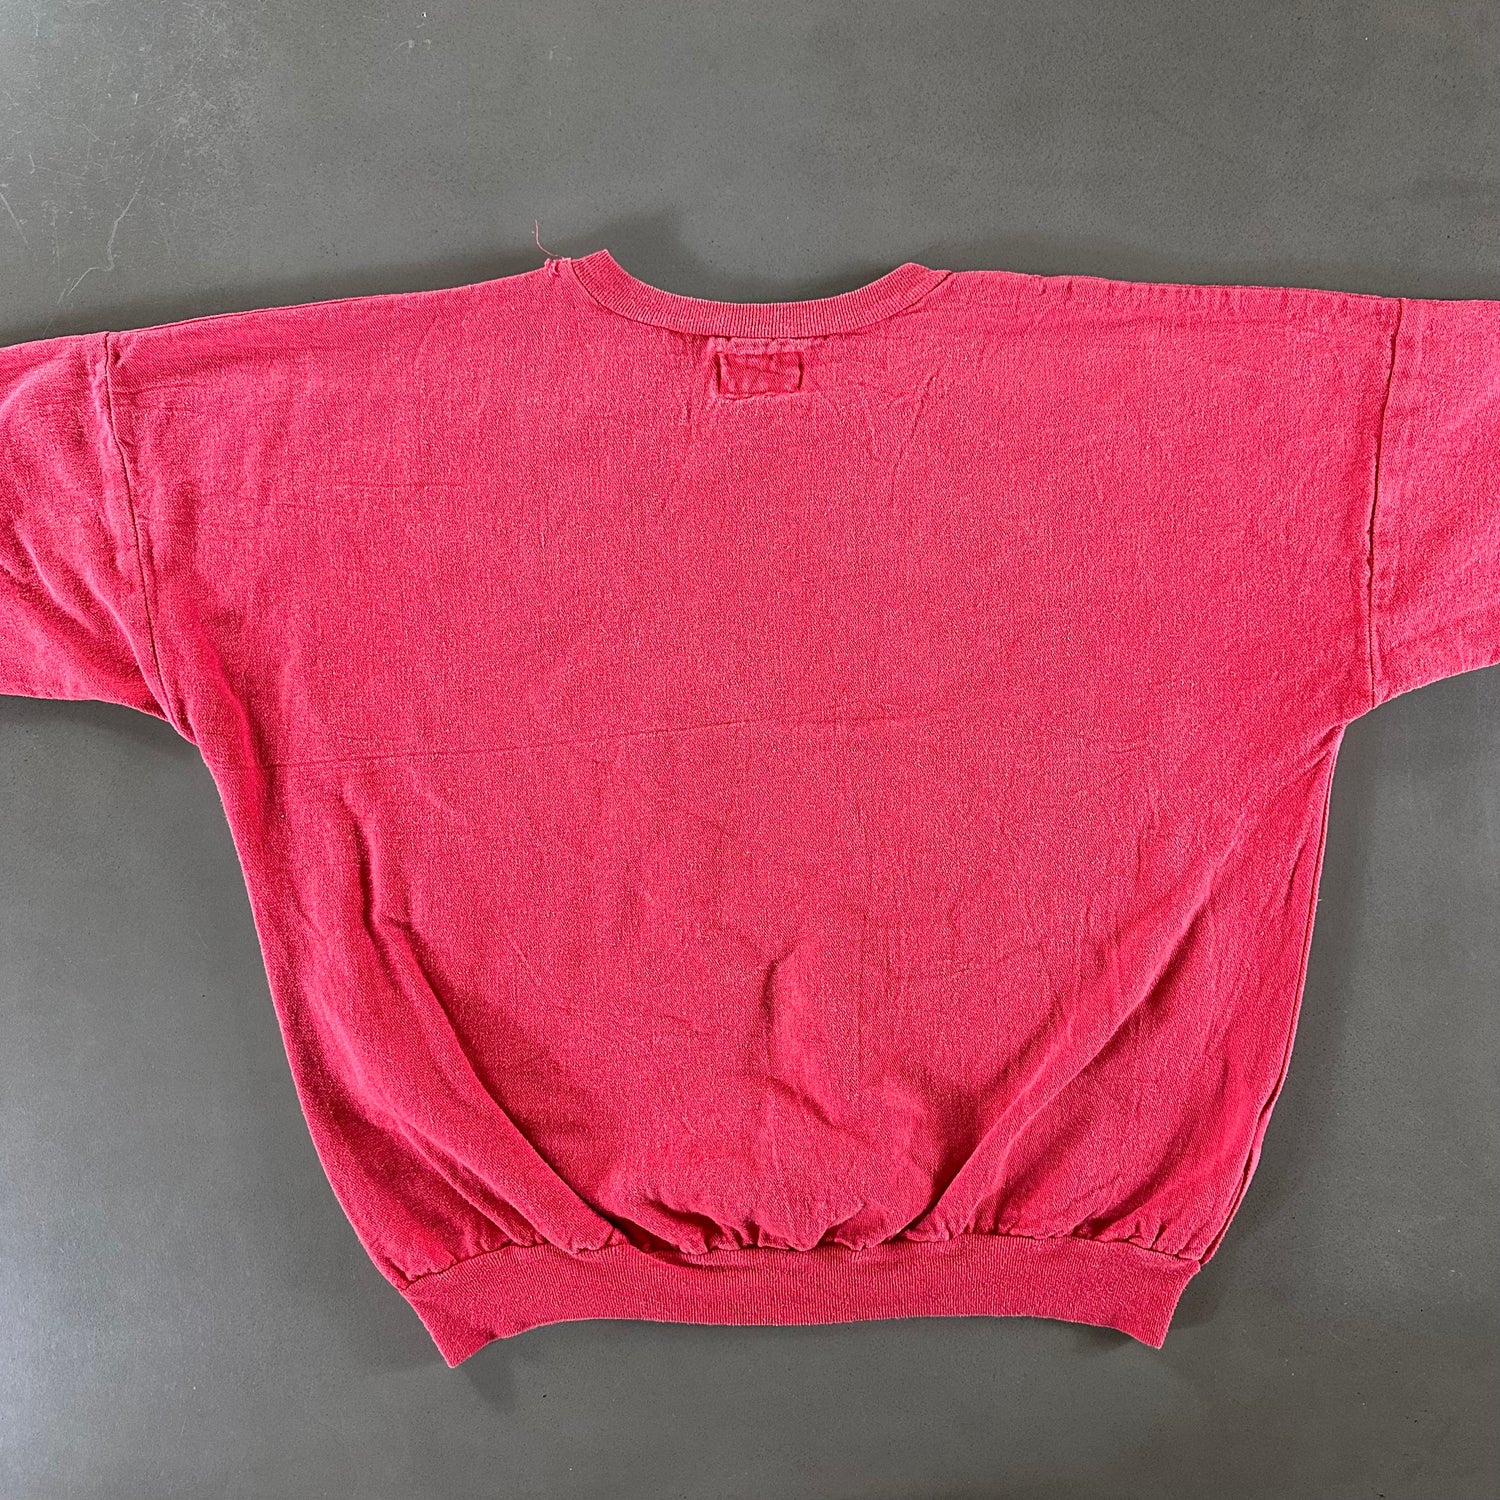 Vintage 1990s Italy Sweatshirt size XL